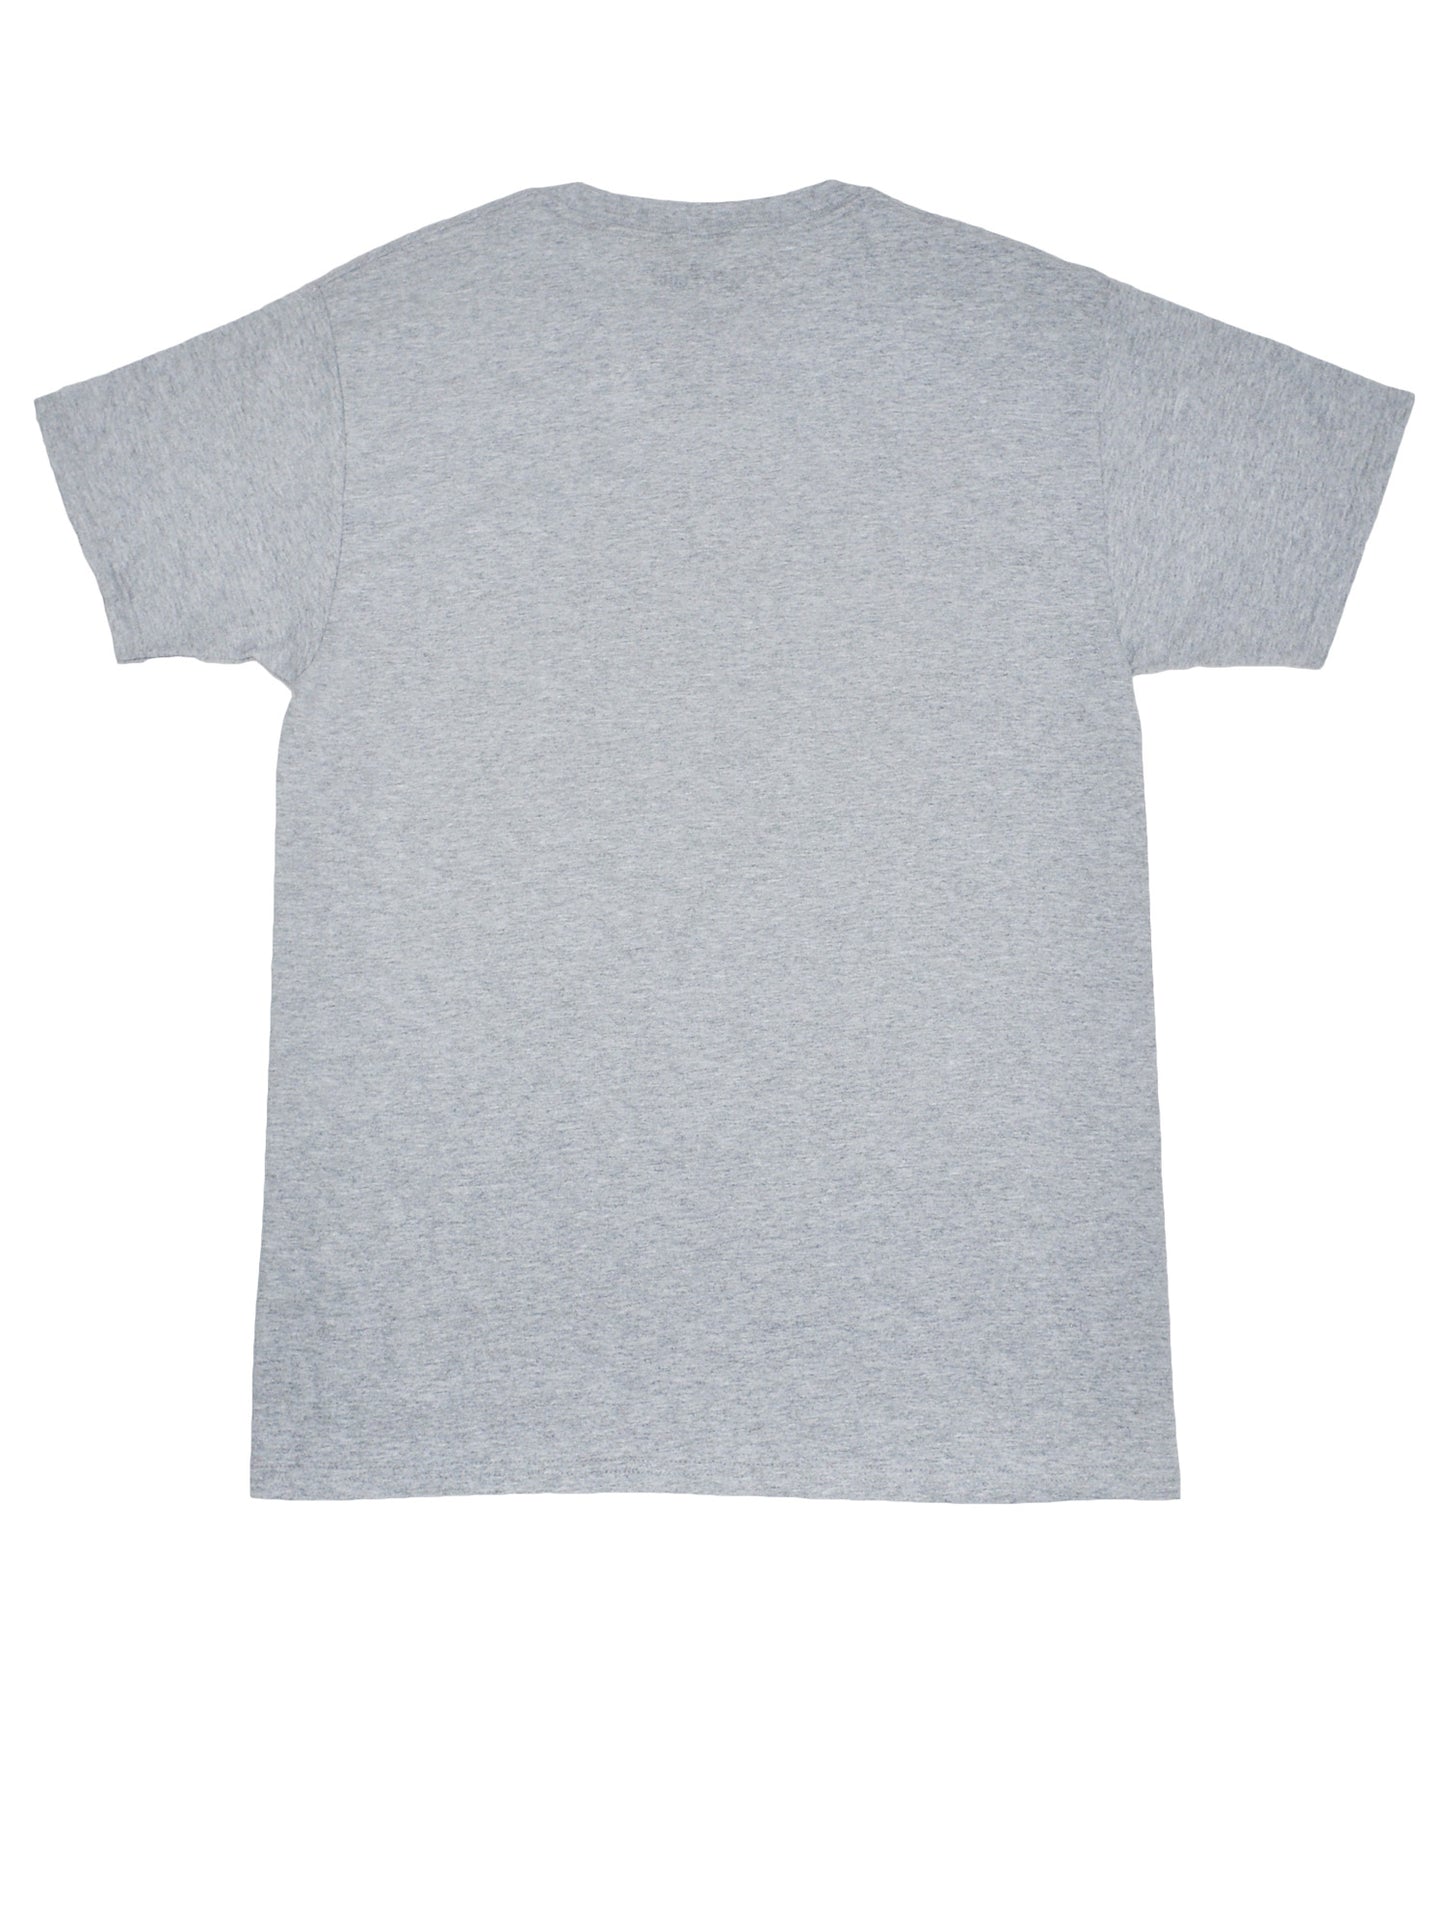 Men's Harry Potter Hogwarts Crest T-Shirt Short Sleeve Gray (Size Medium)